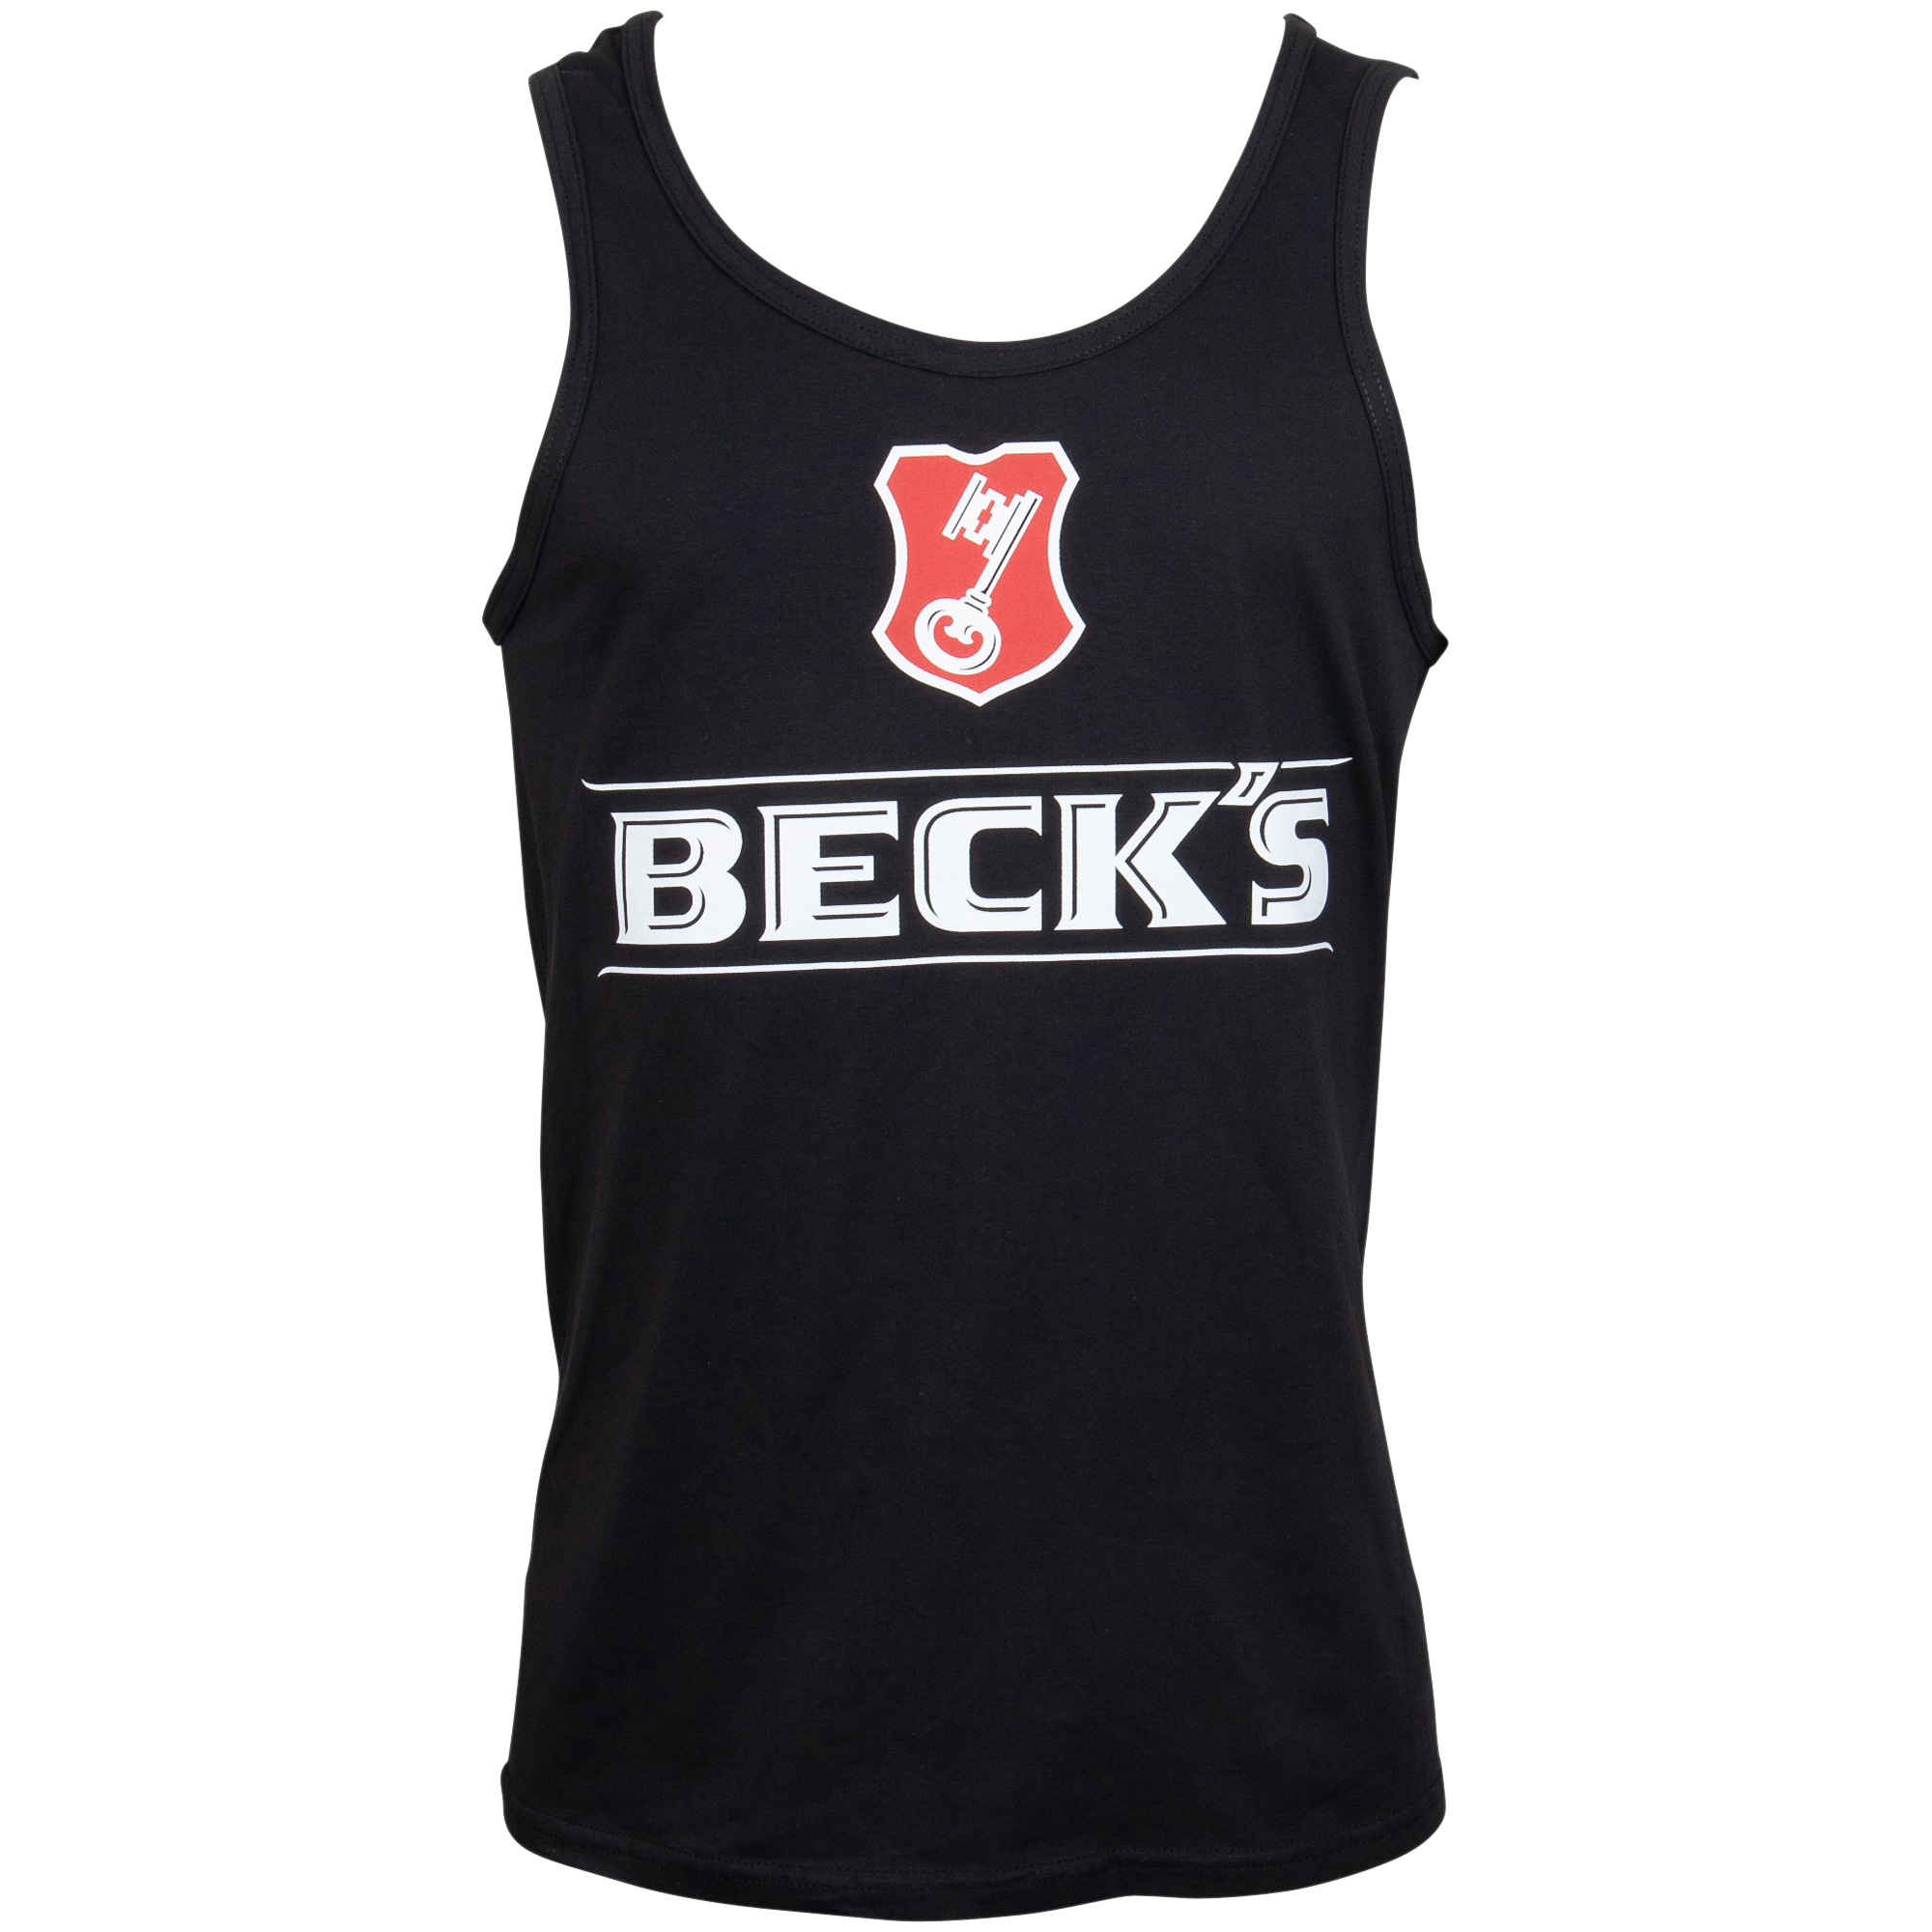 Beck's - Logo tank top - black